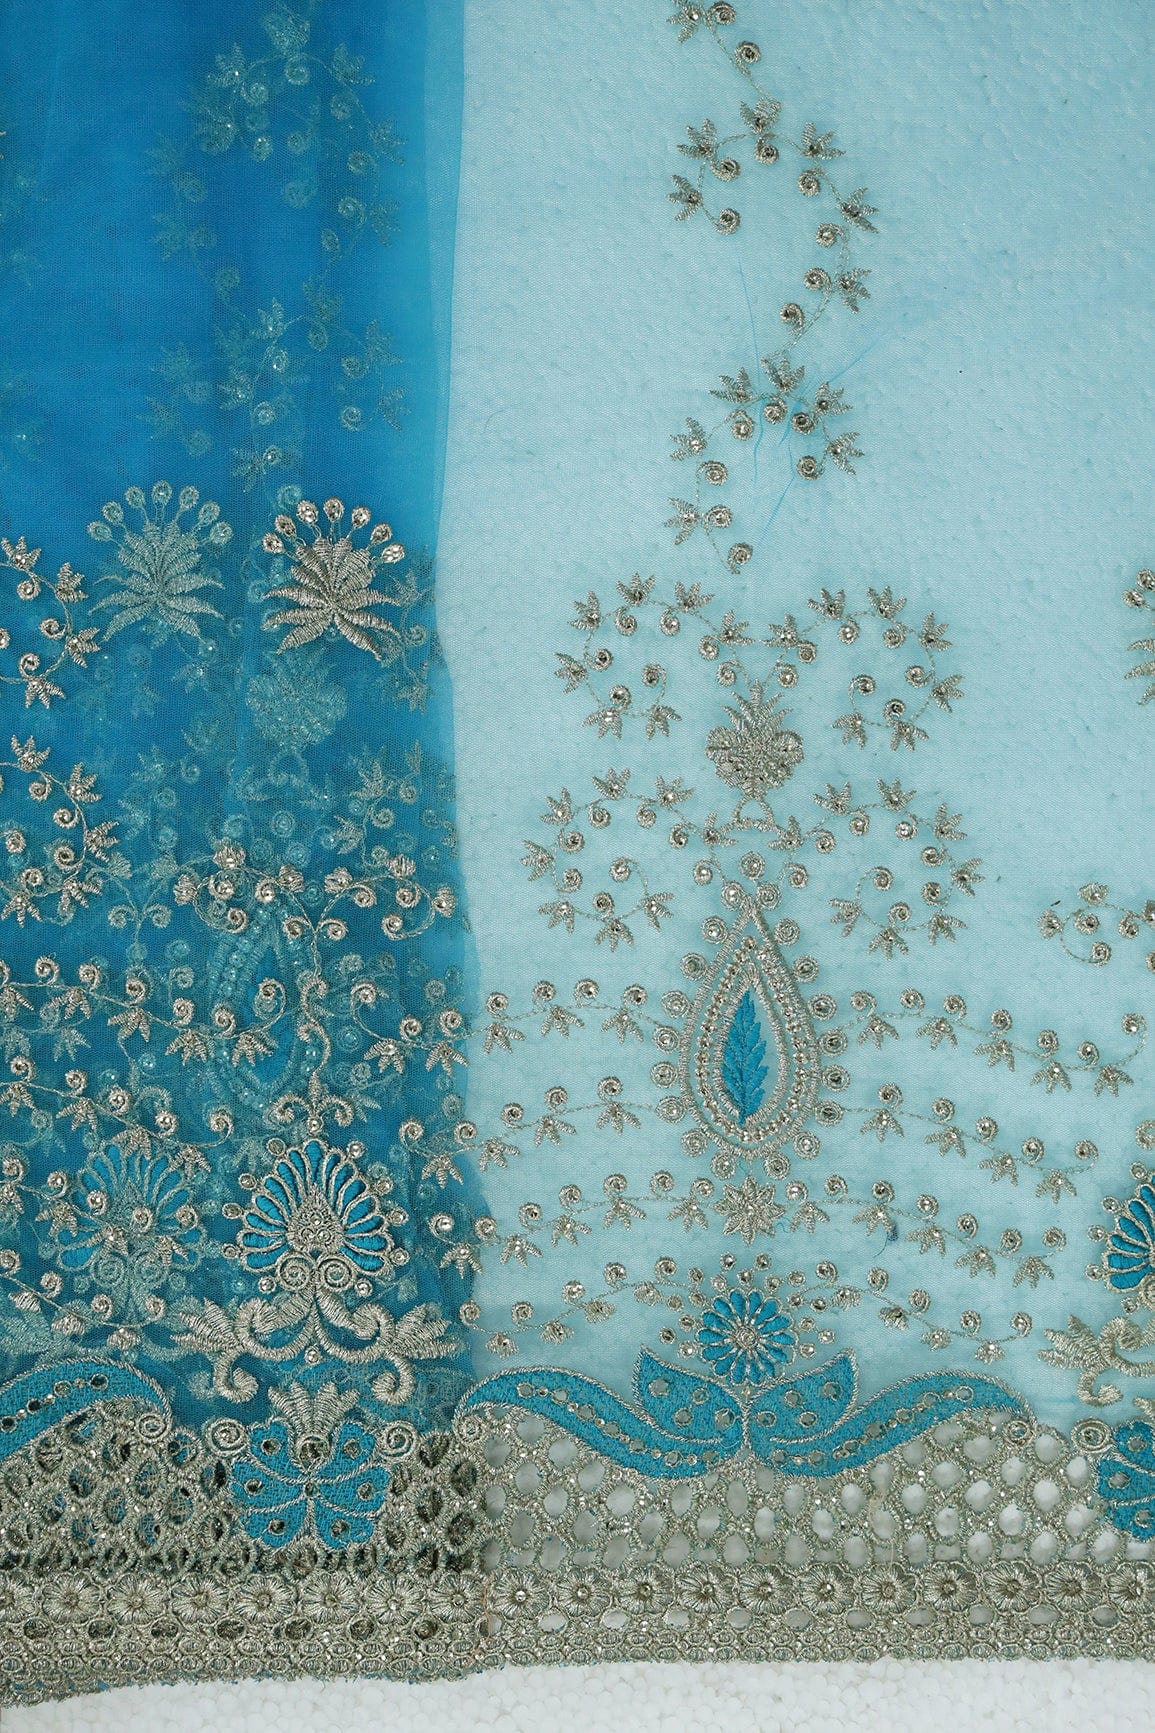 doeraa Embroidery Fabrics Big Width''56'' Blue Thread With Zari Leafy Embroidery Work On Cerulean Blue Soft Net Fabric With Border